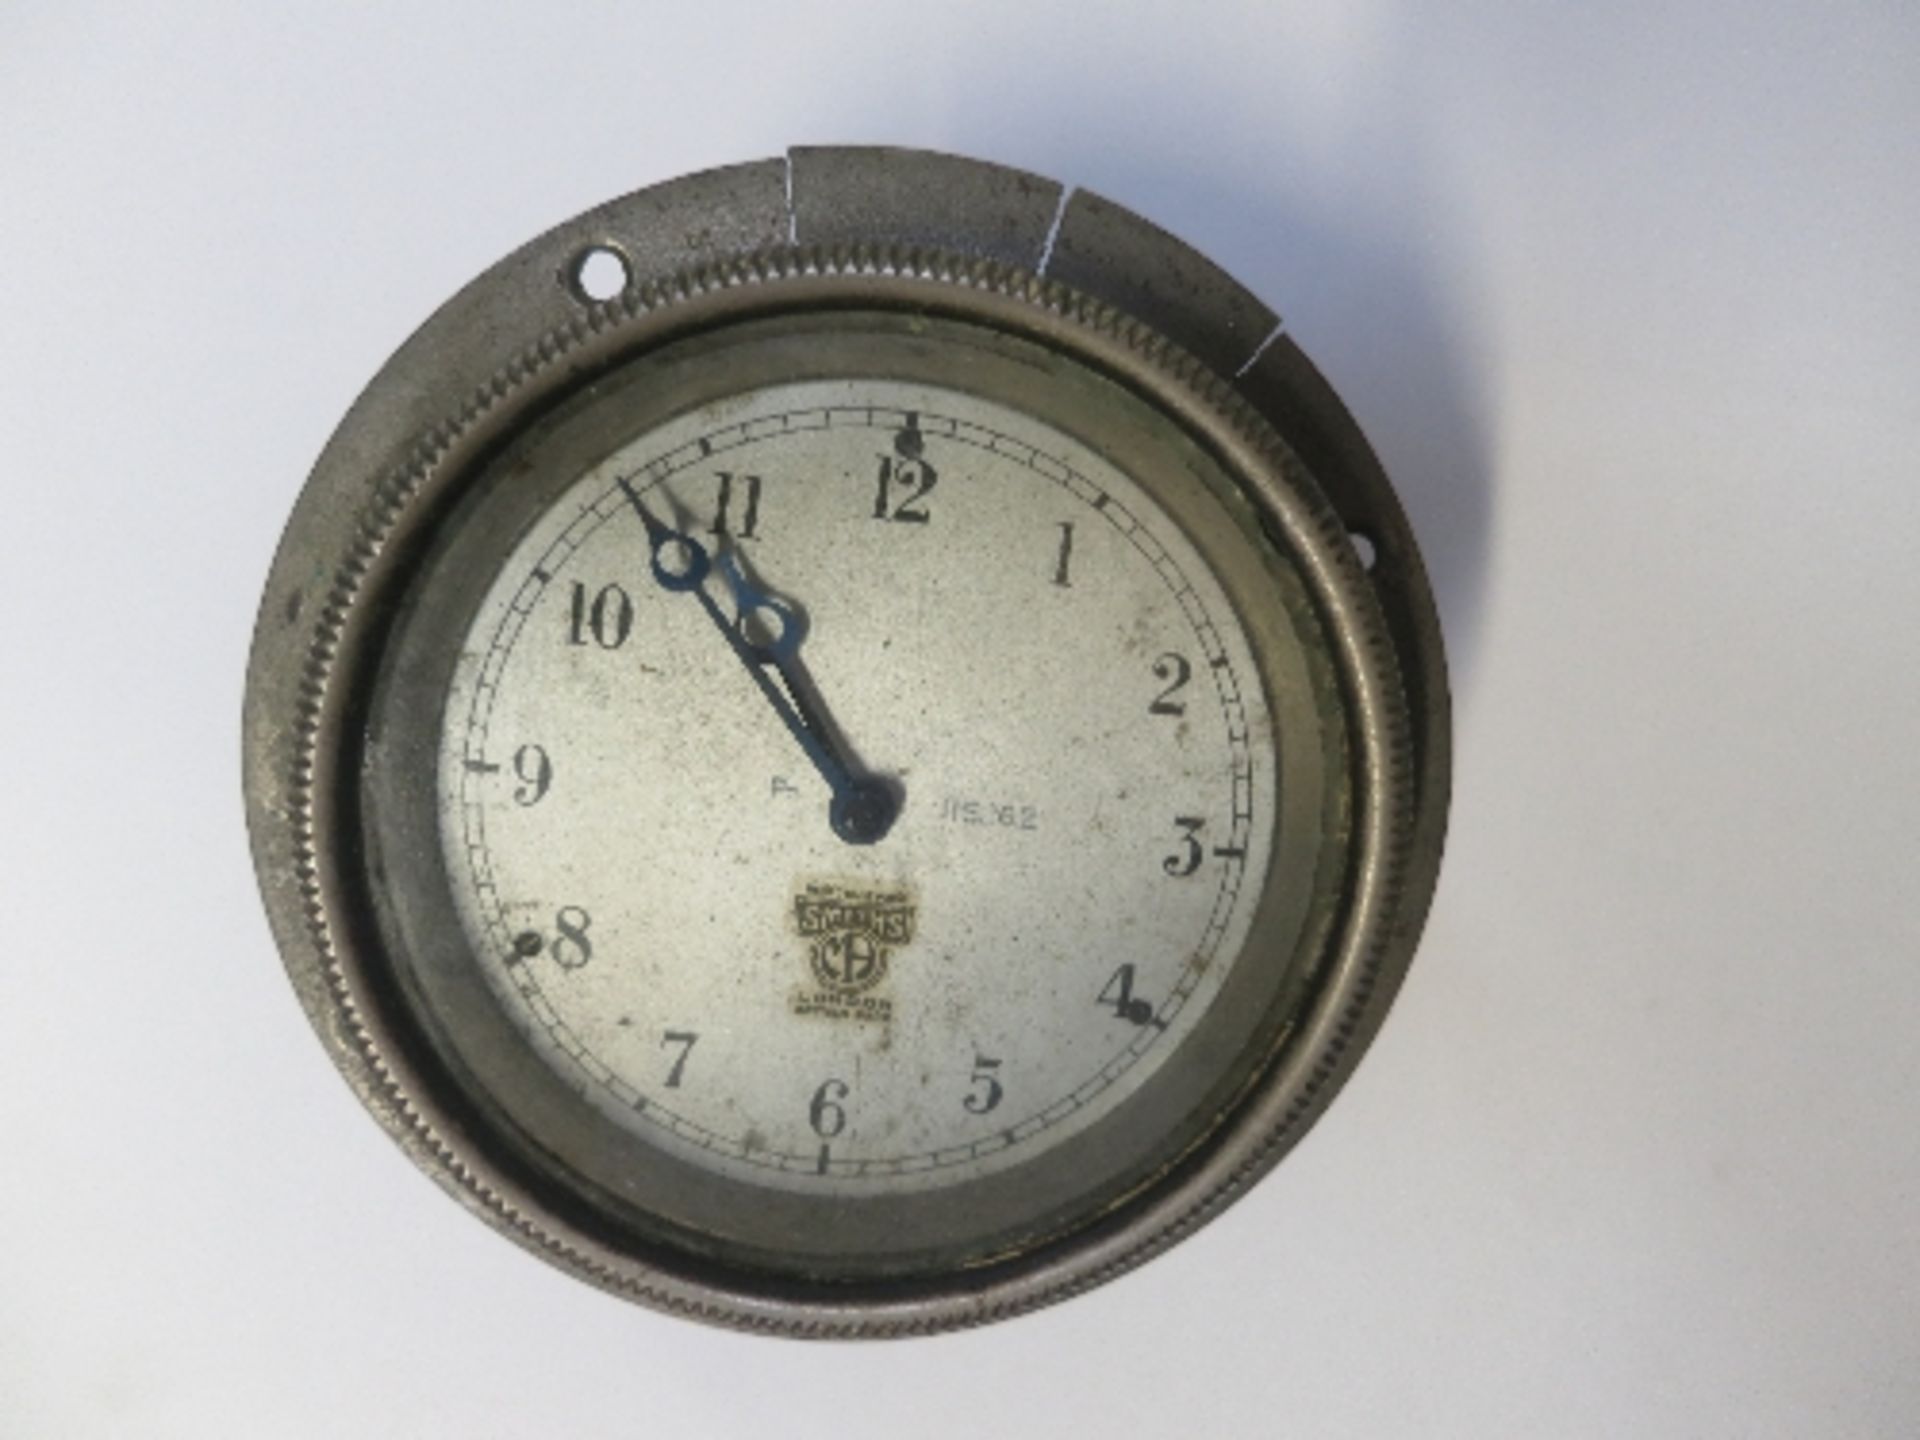 Smiths vintage dashboard clock no 116.62